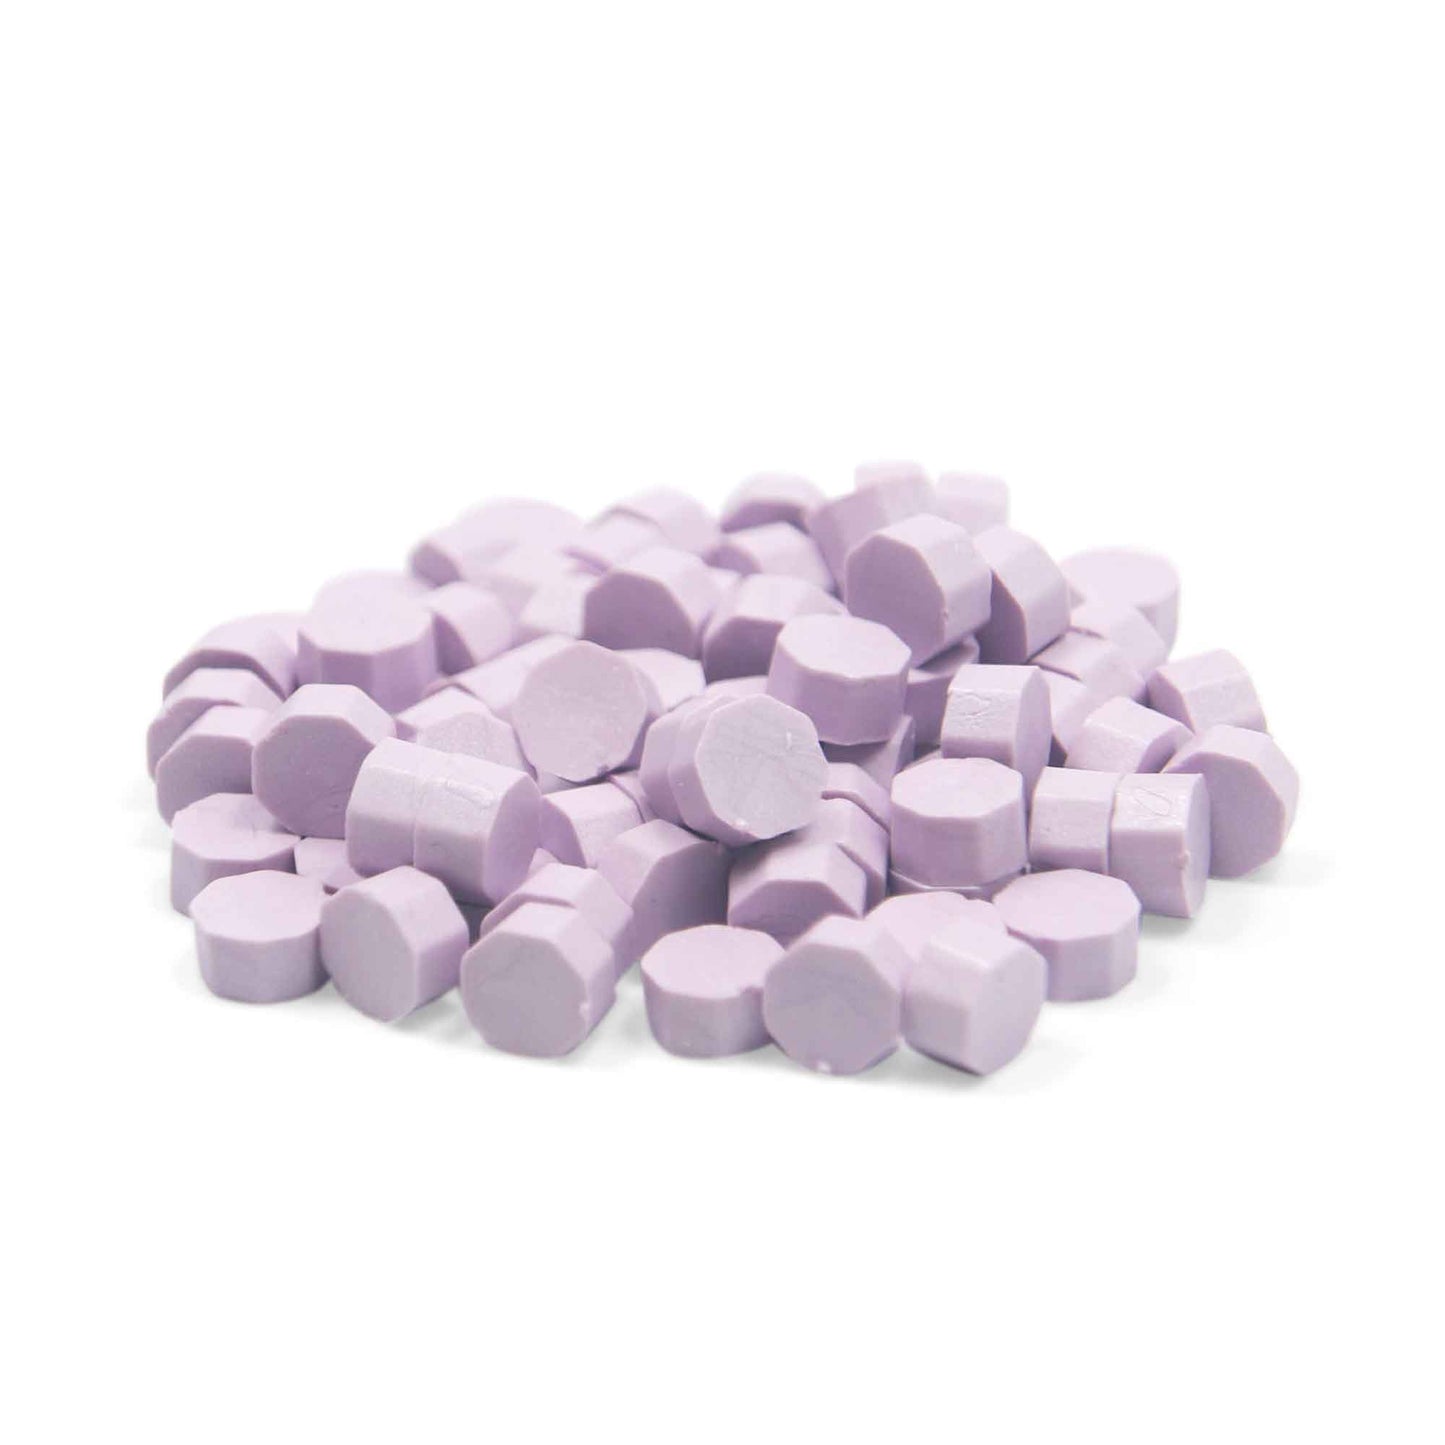 Violet Mist Wax Beads